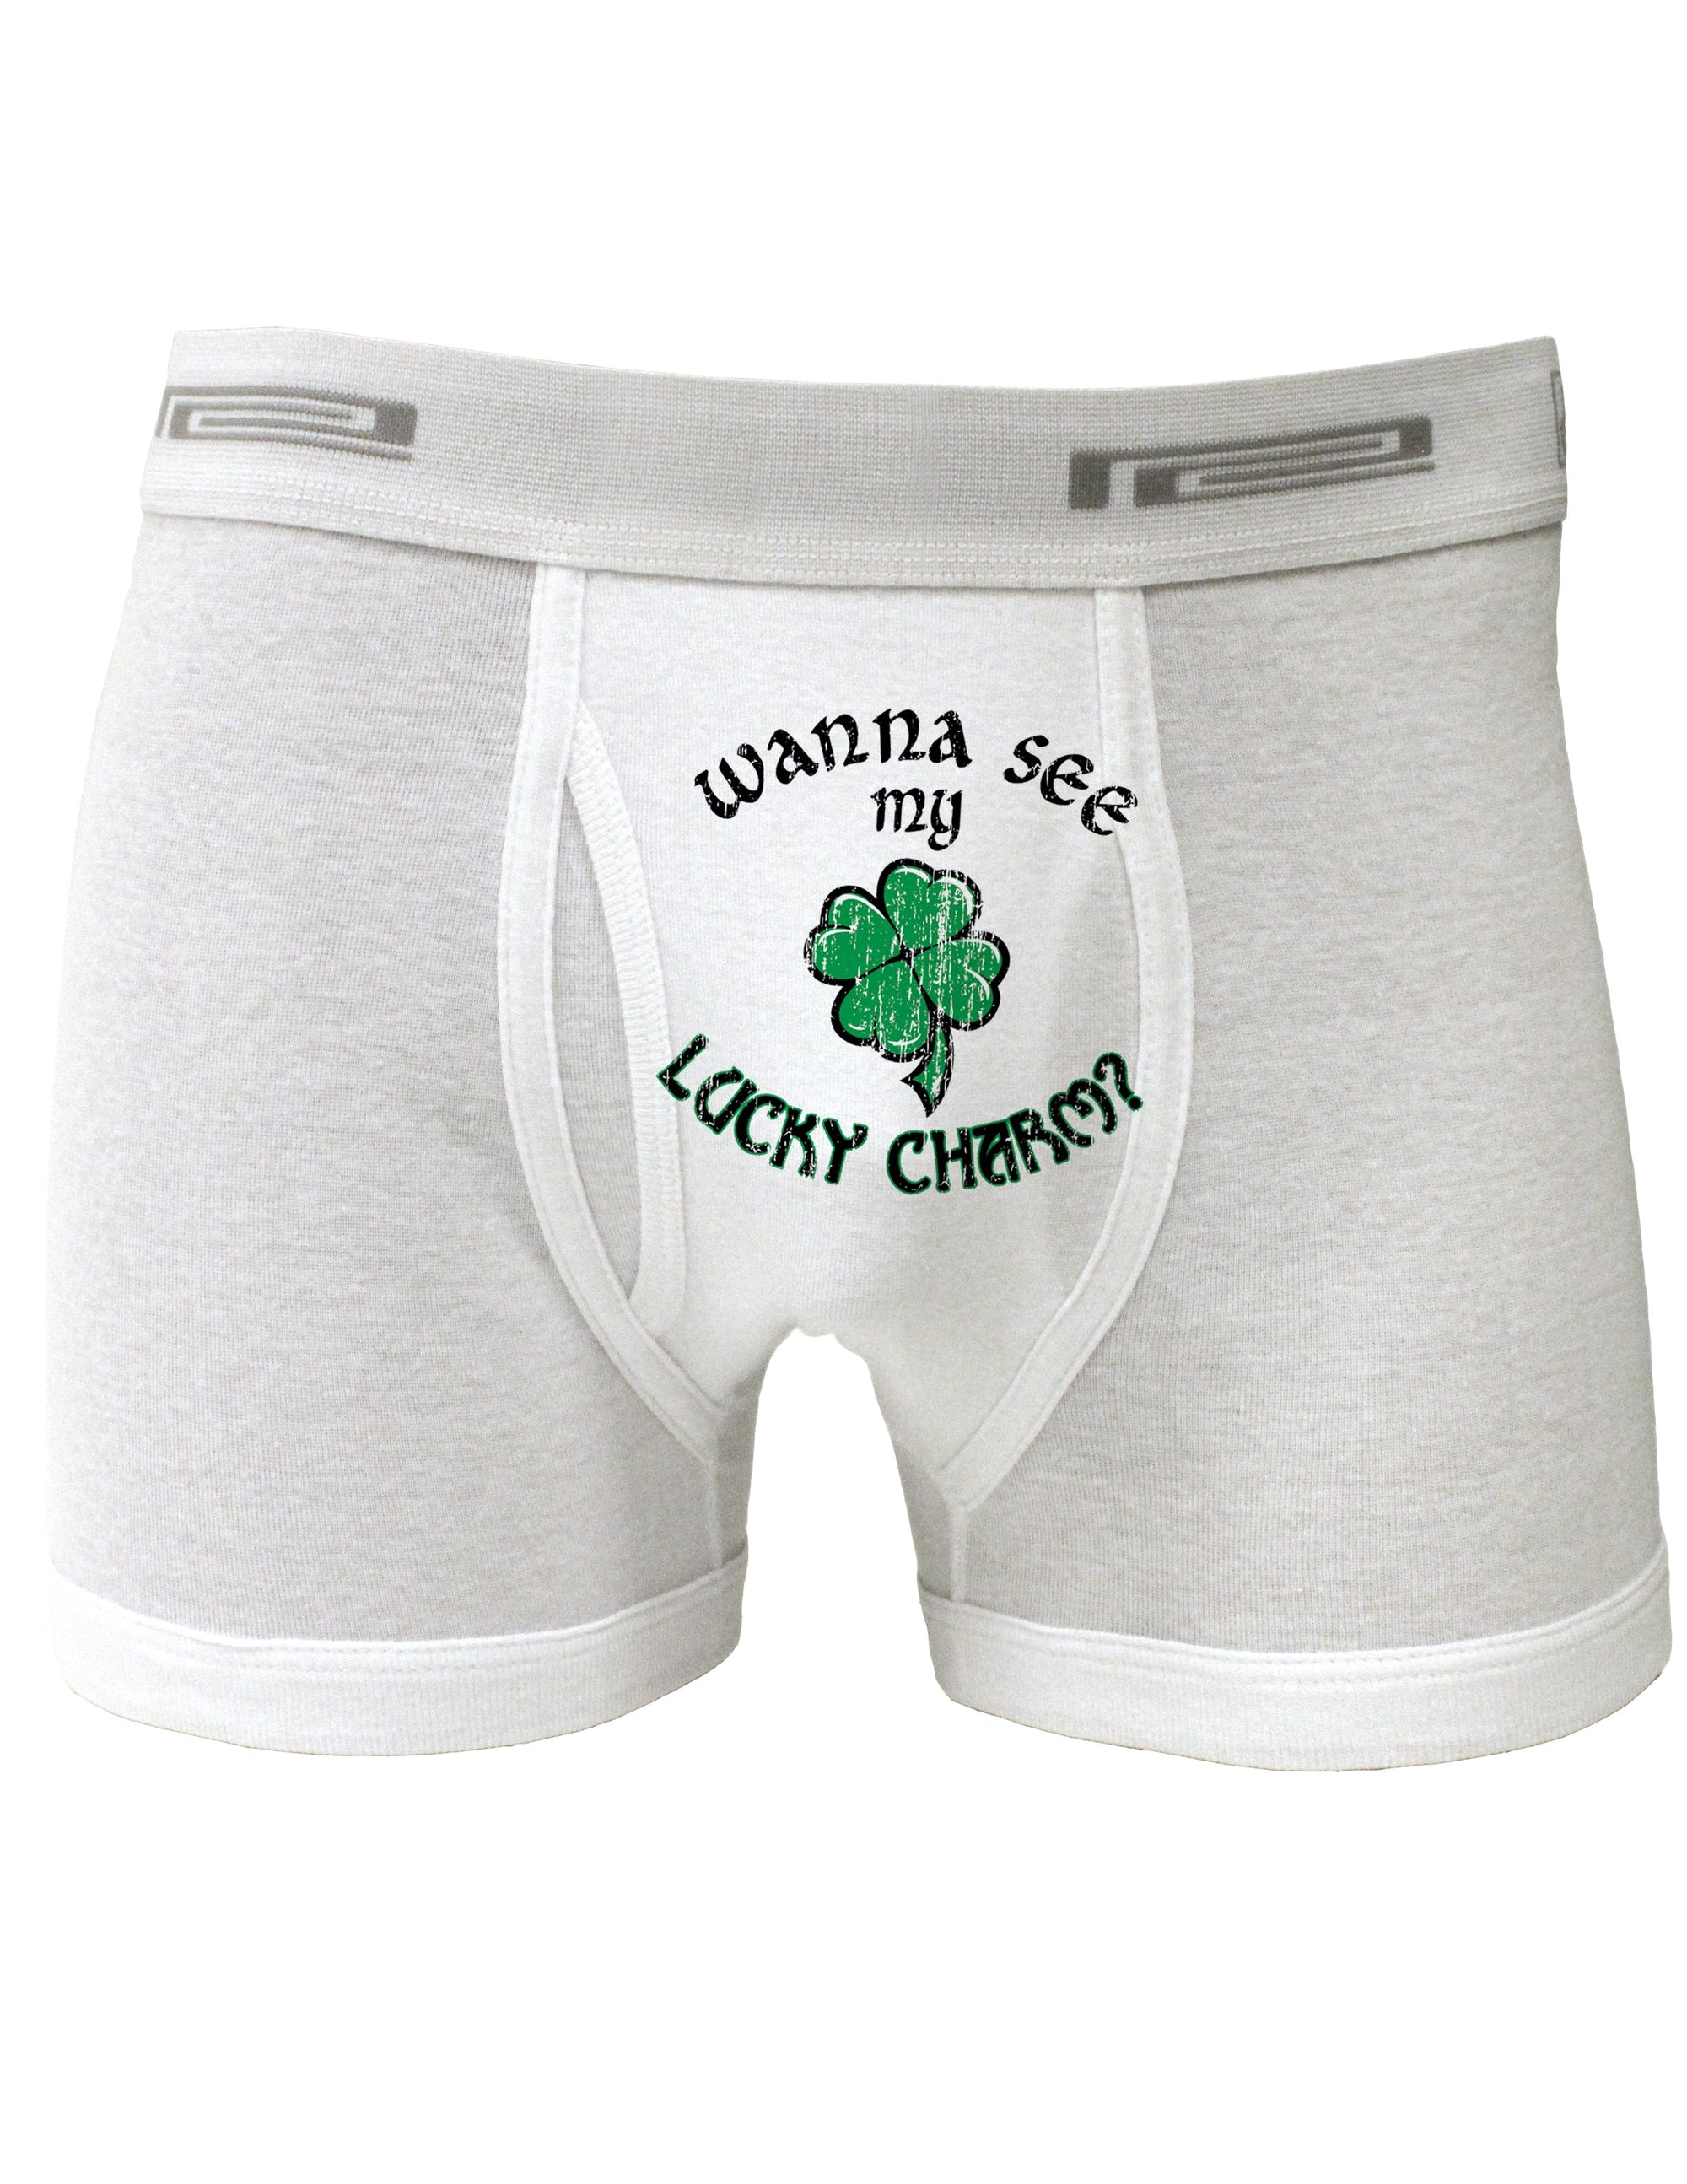 St Patricks Day Boxer Brief Underwear - Select Your Print - ABC Underwear